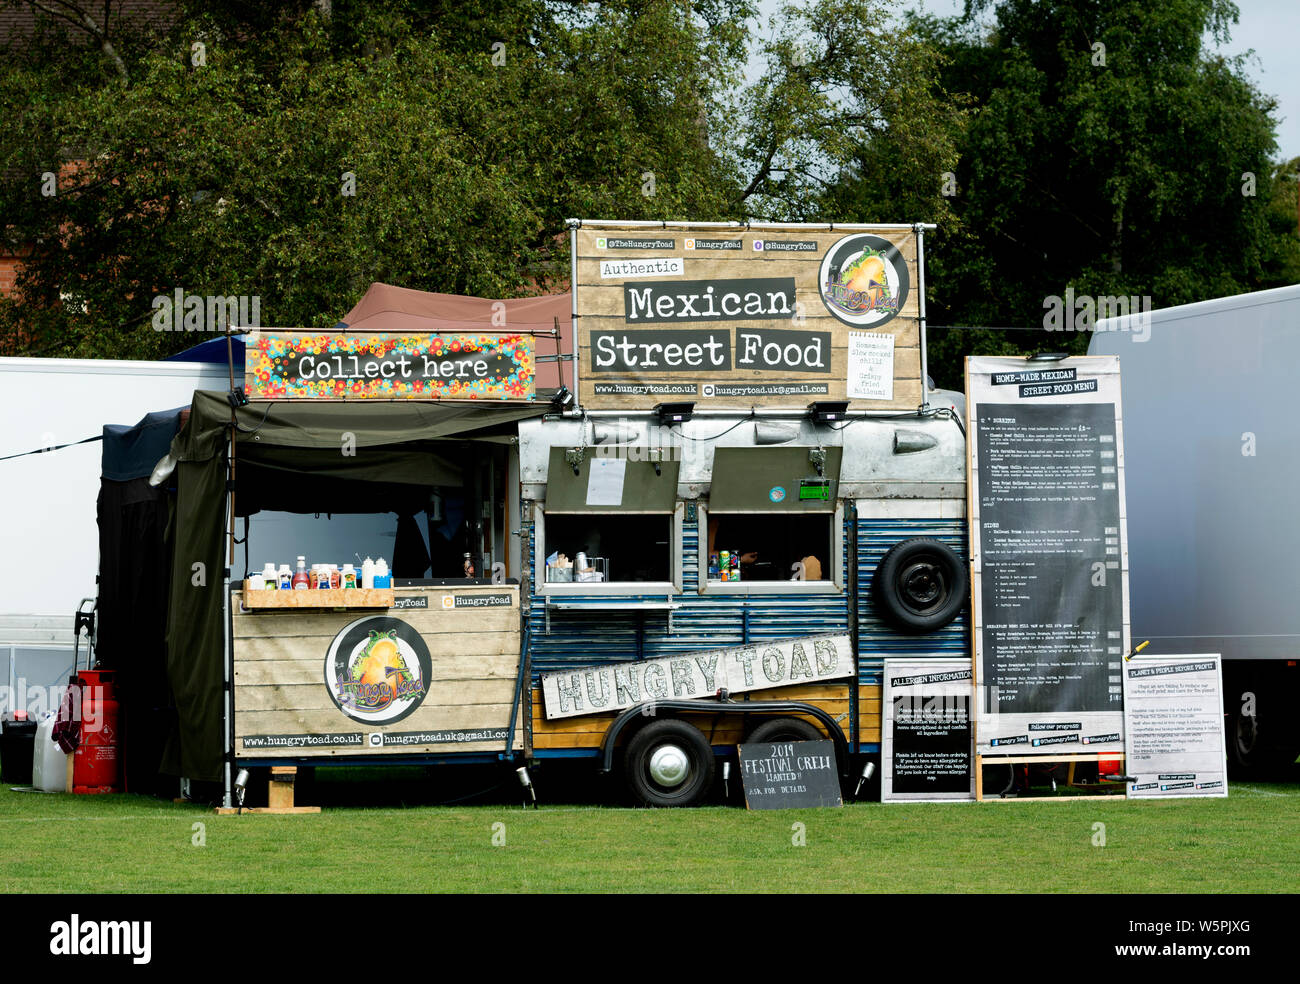 A Mexican street food stall at Warwick Folk Festival, Warwickshire, UK Stock Photo